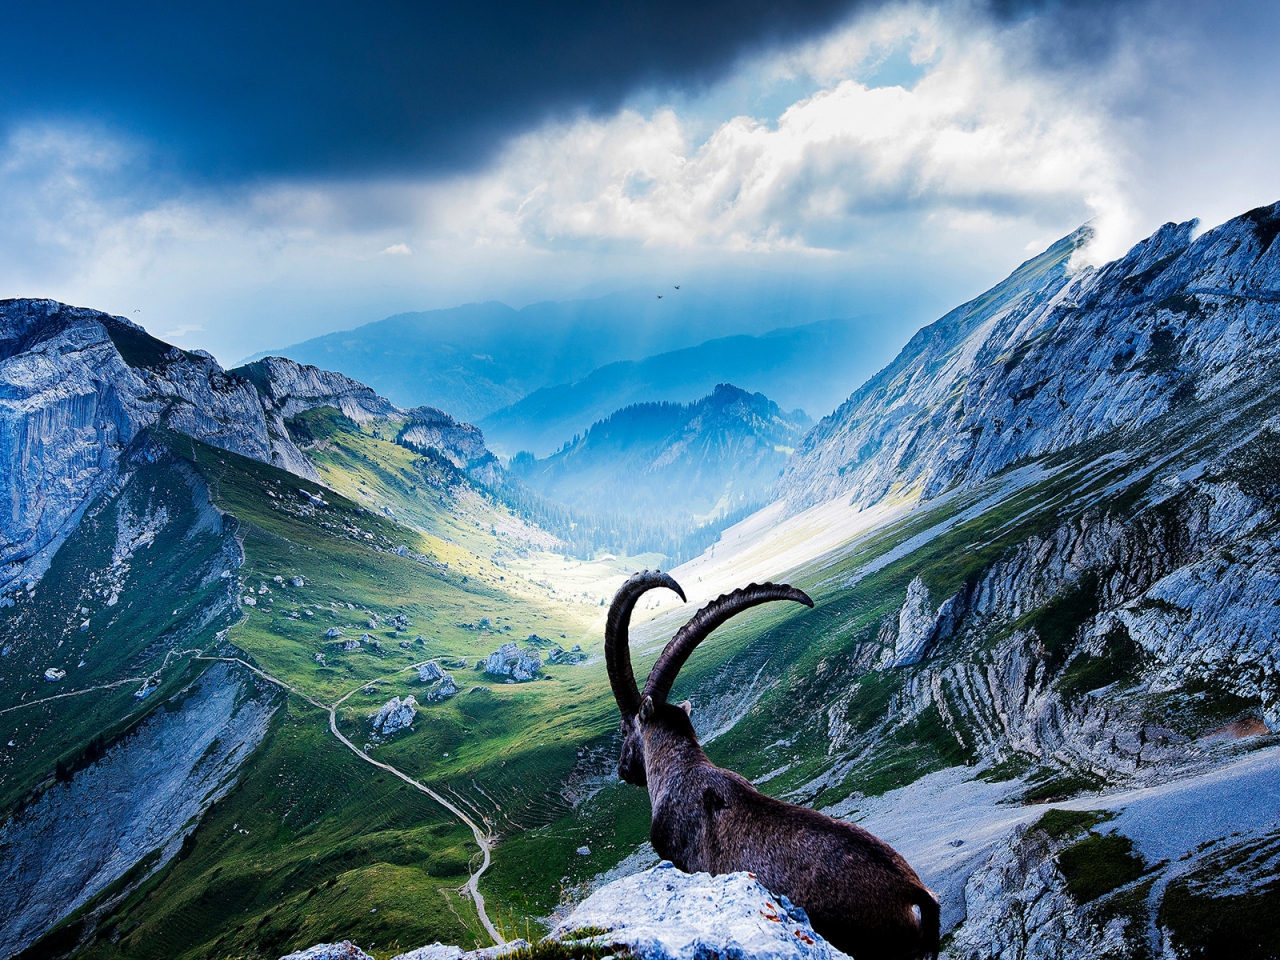 Goat at Mount Pilatus for 1280 x 960 resolution